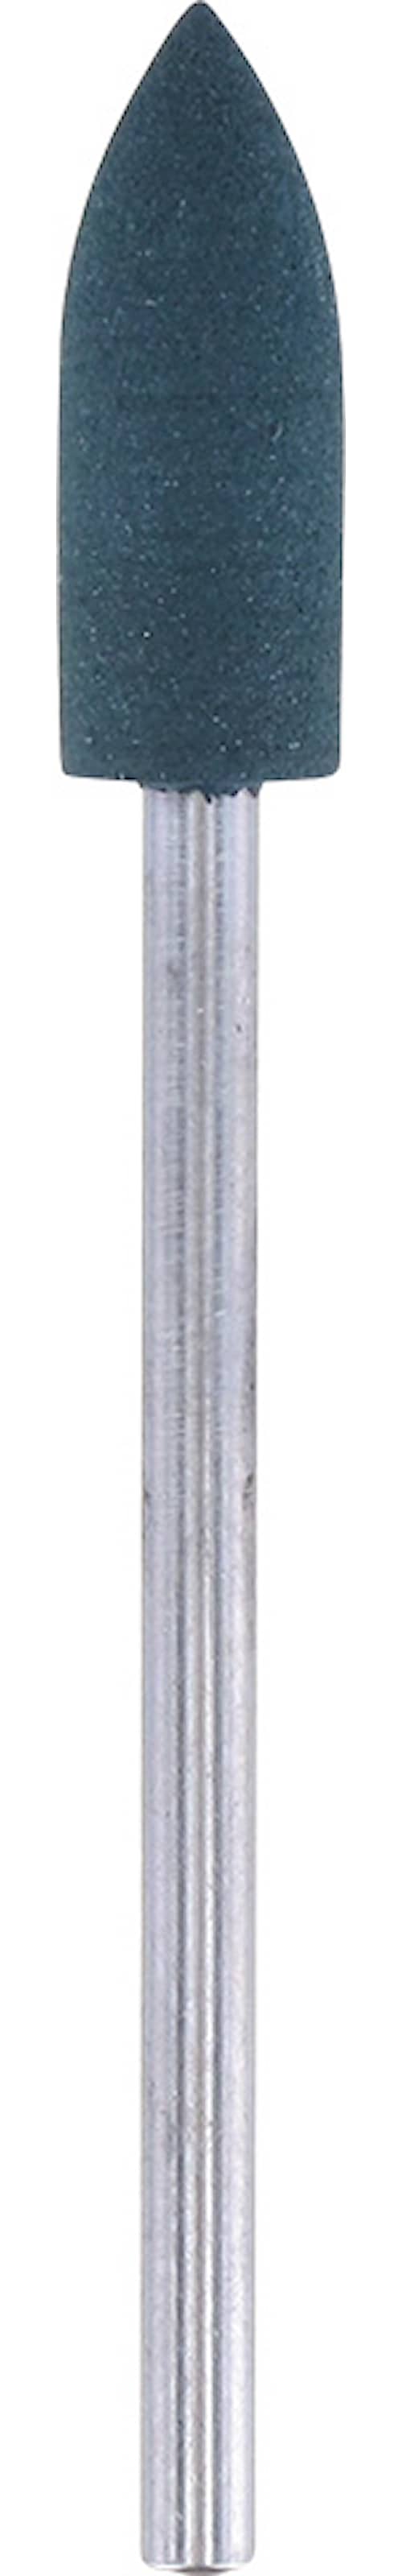 Dremel Polerstift av Gummi 462JA 3st 6,4mm